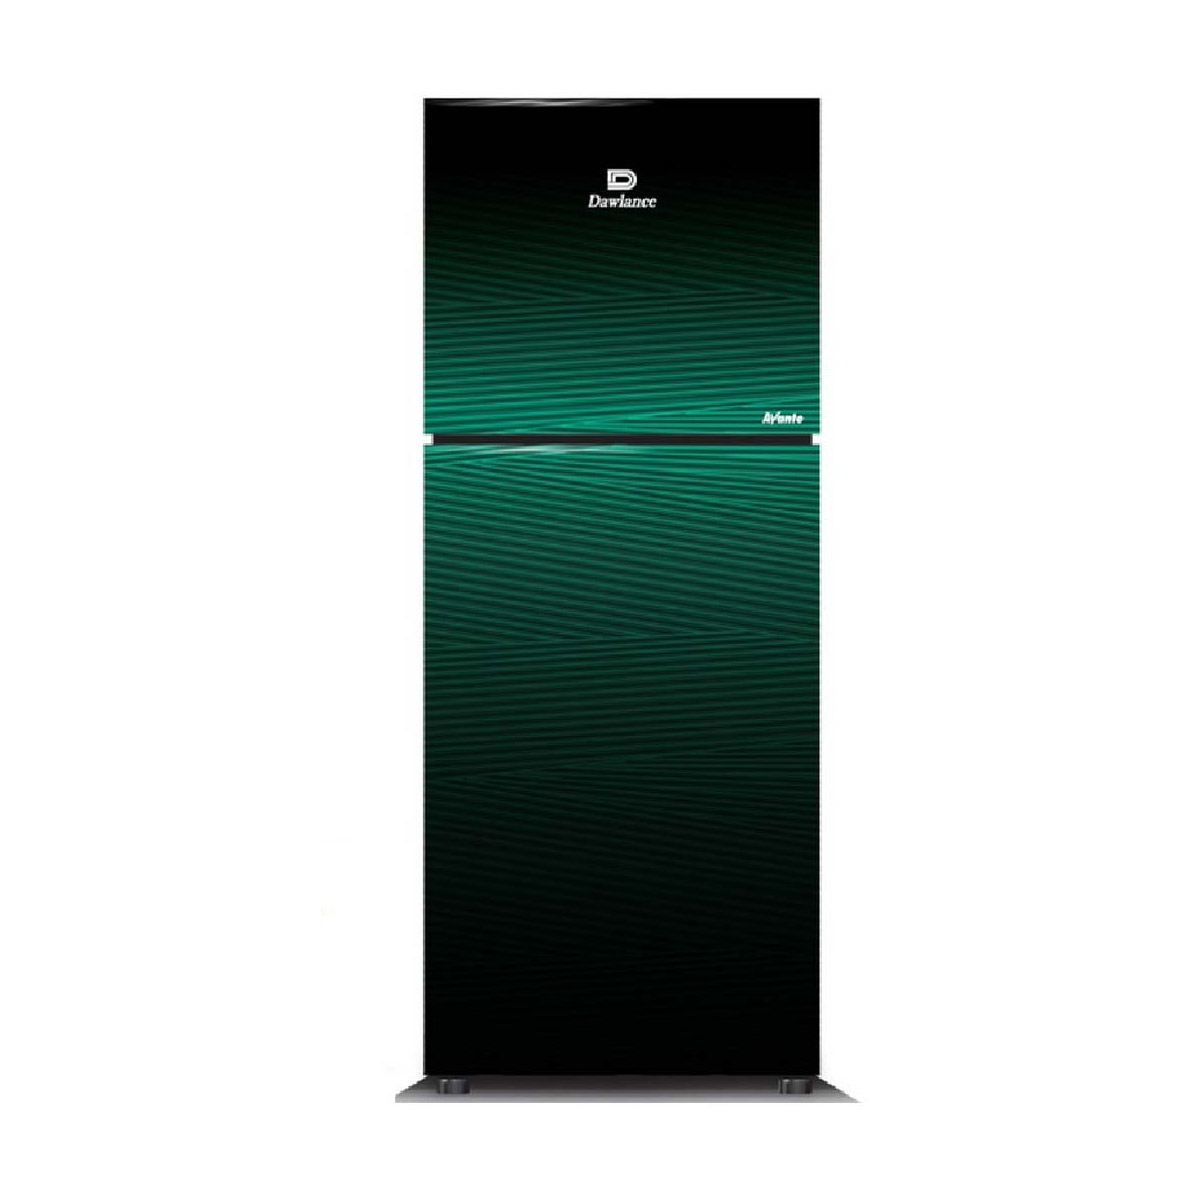 Dawlance Refrigerator 9193 Avante Noir Green